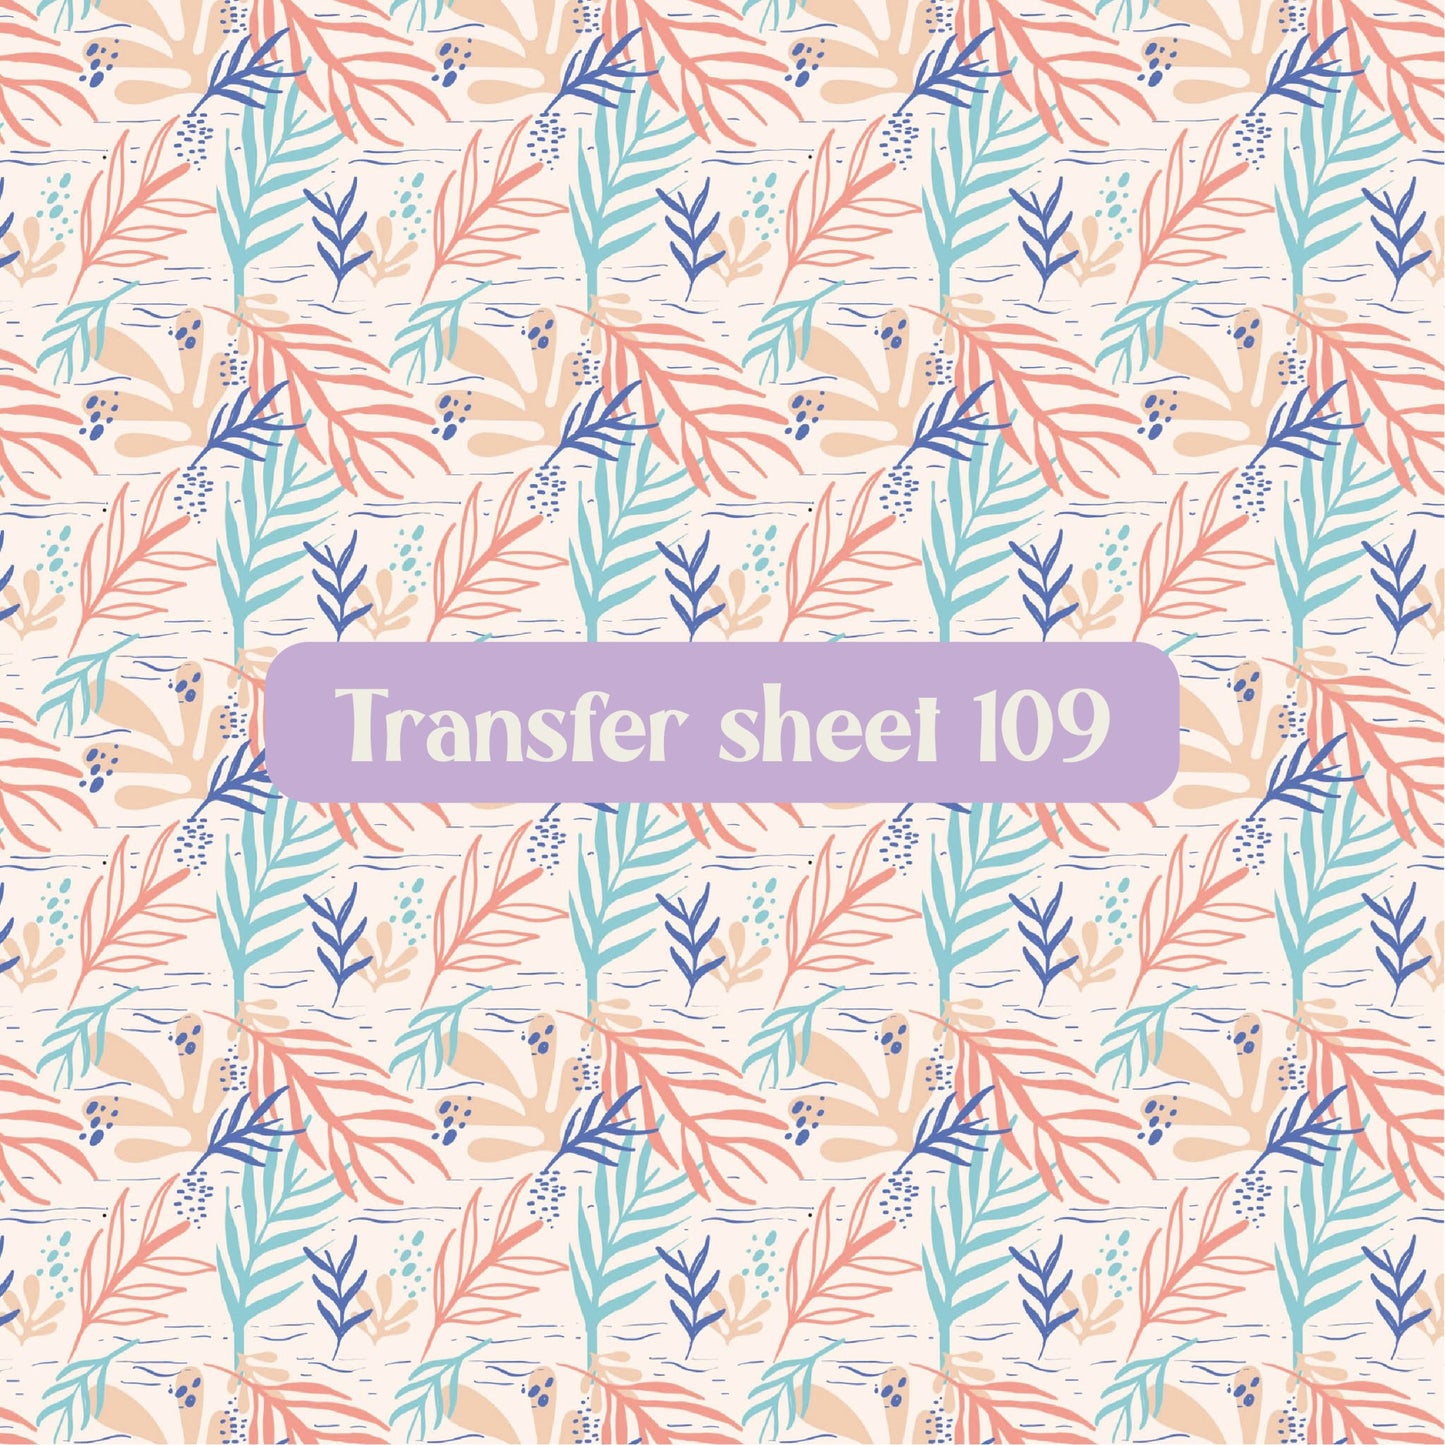 Transfer sheet 109 - Transfer paper - CLN Atelier